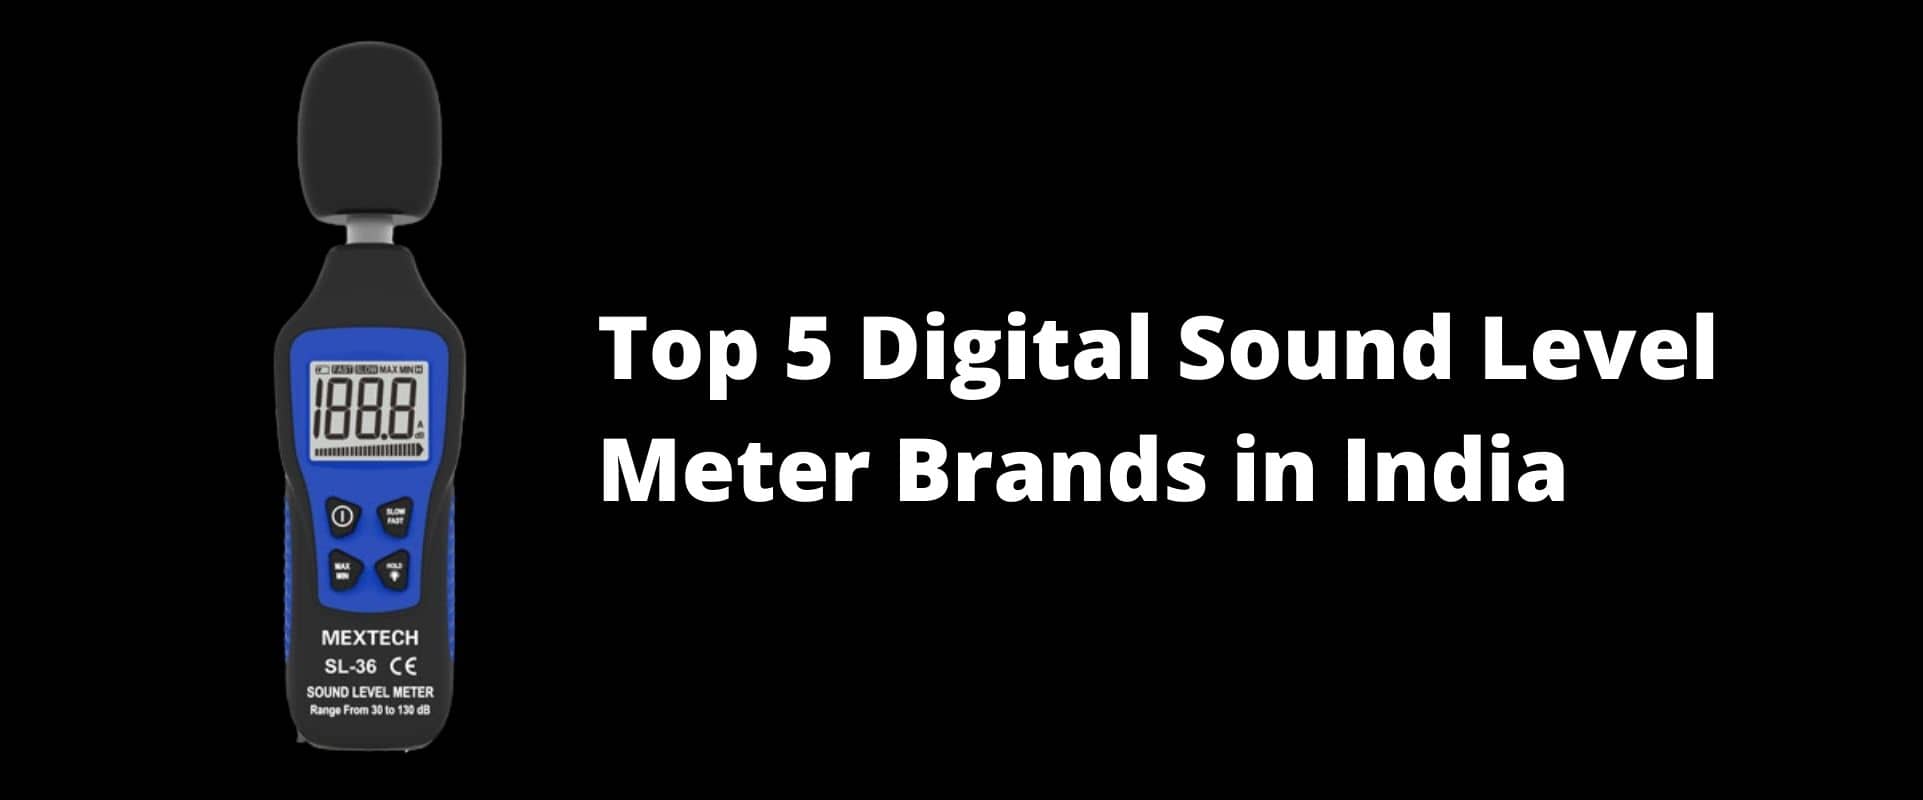 Top 5 Digital Sound Level Meter Brands in India